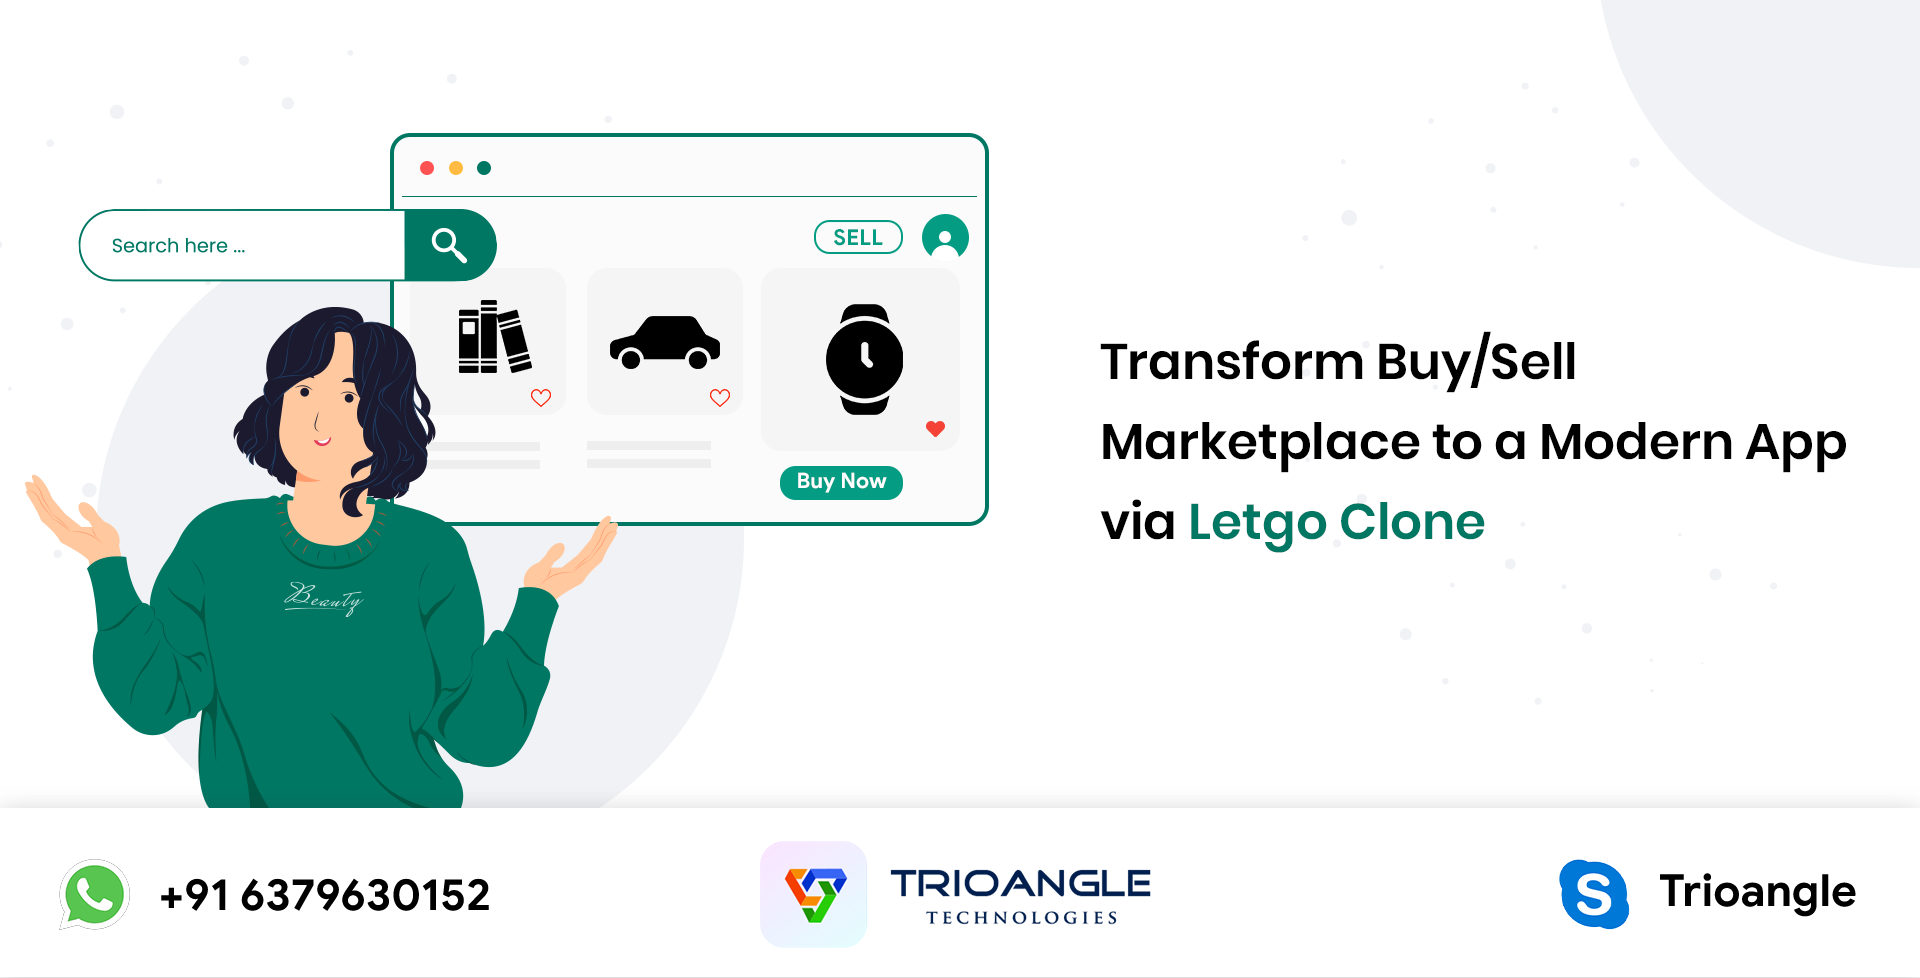 Transform Buy/Sell Marketplace to a Modern App via Letgo Clone